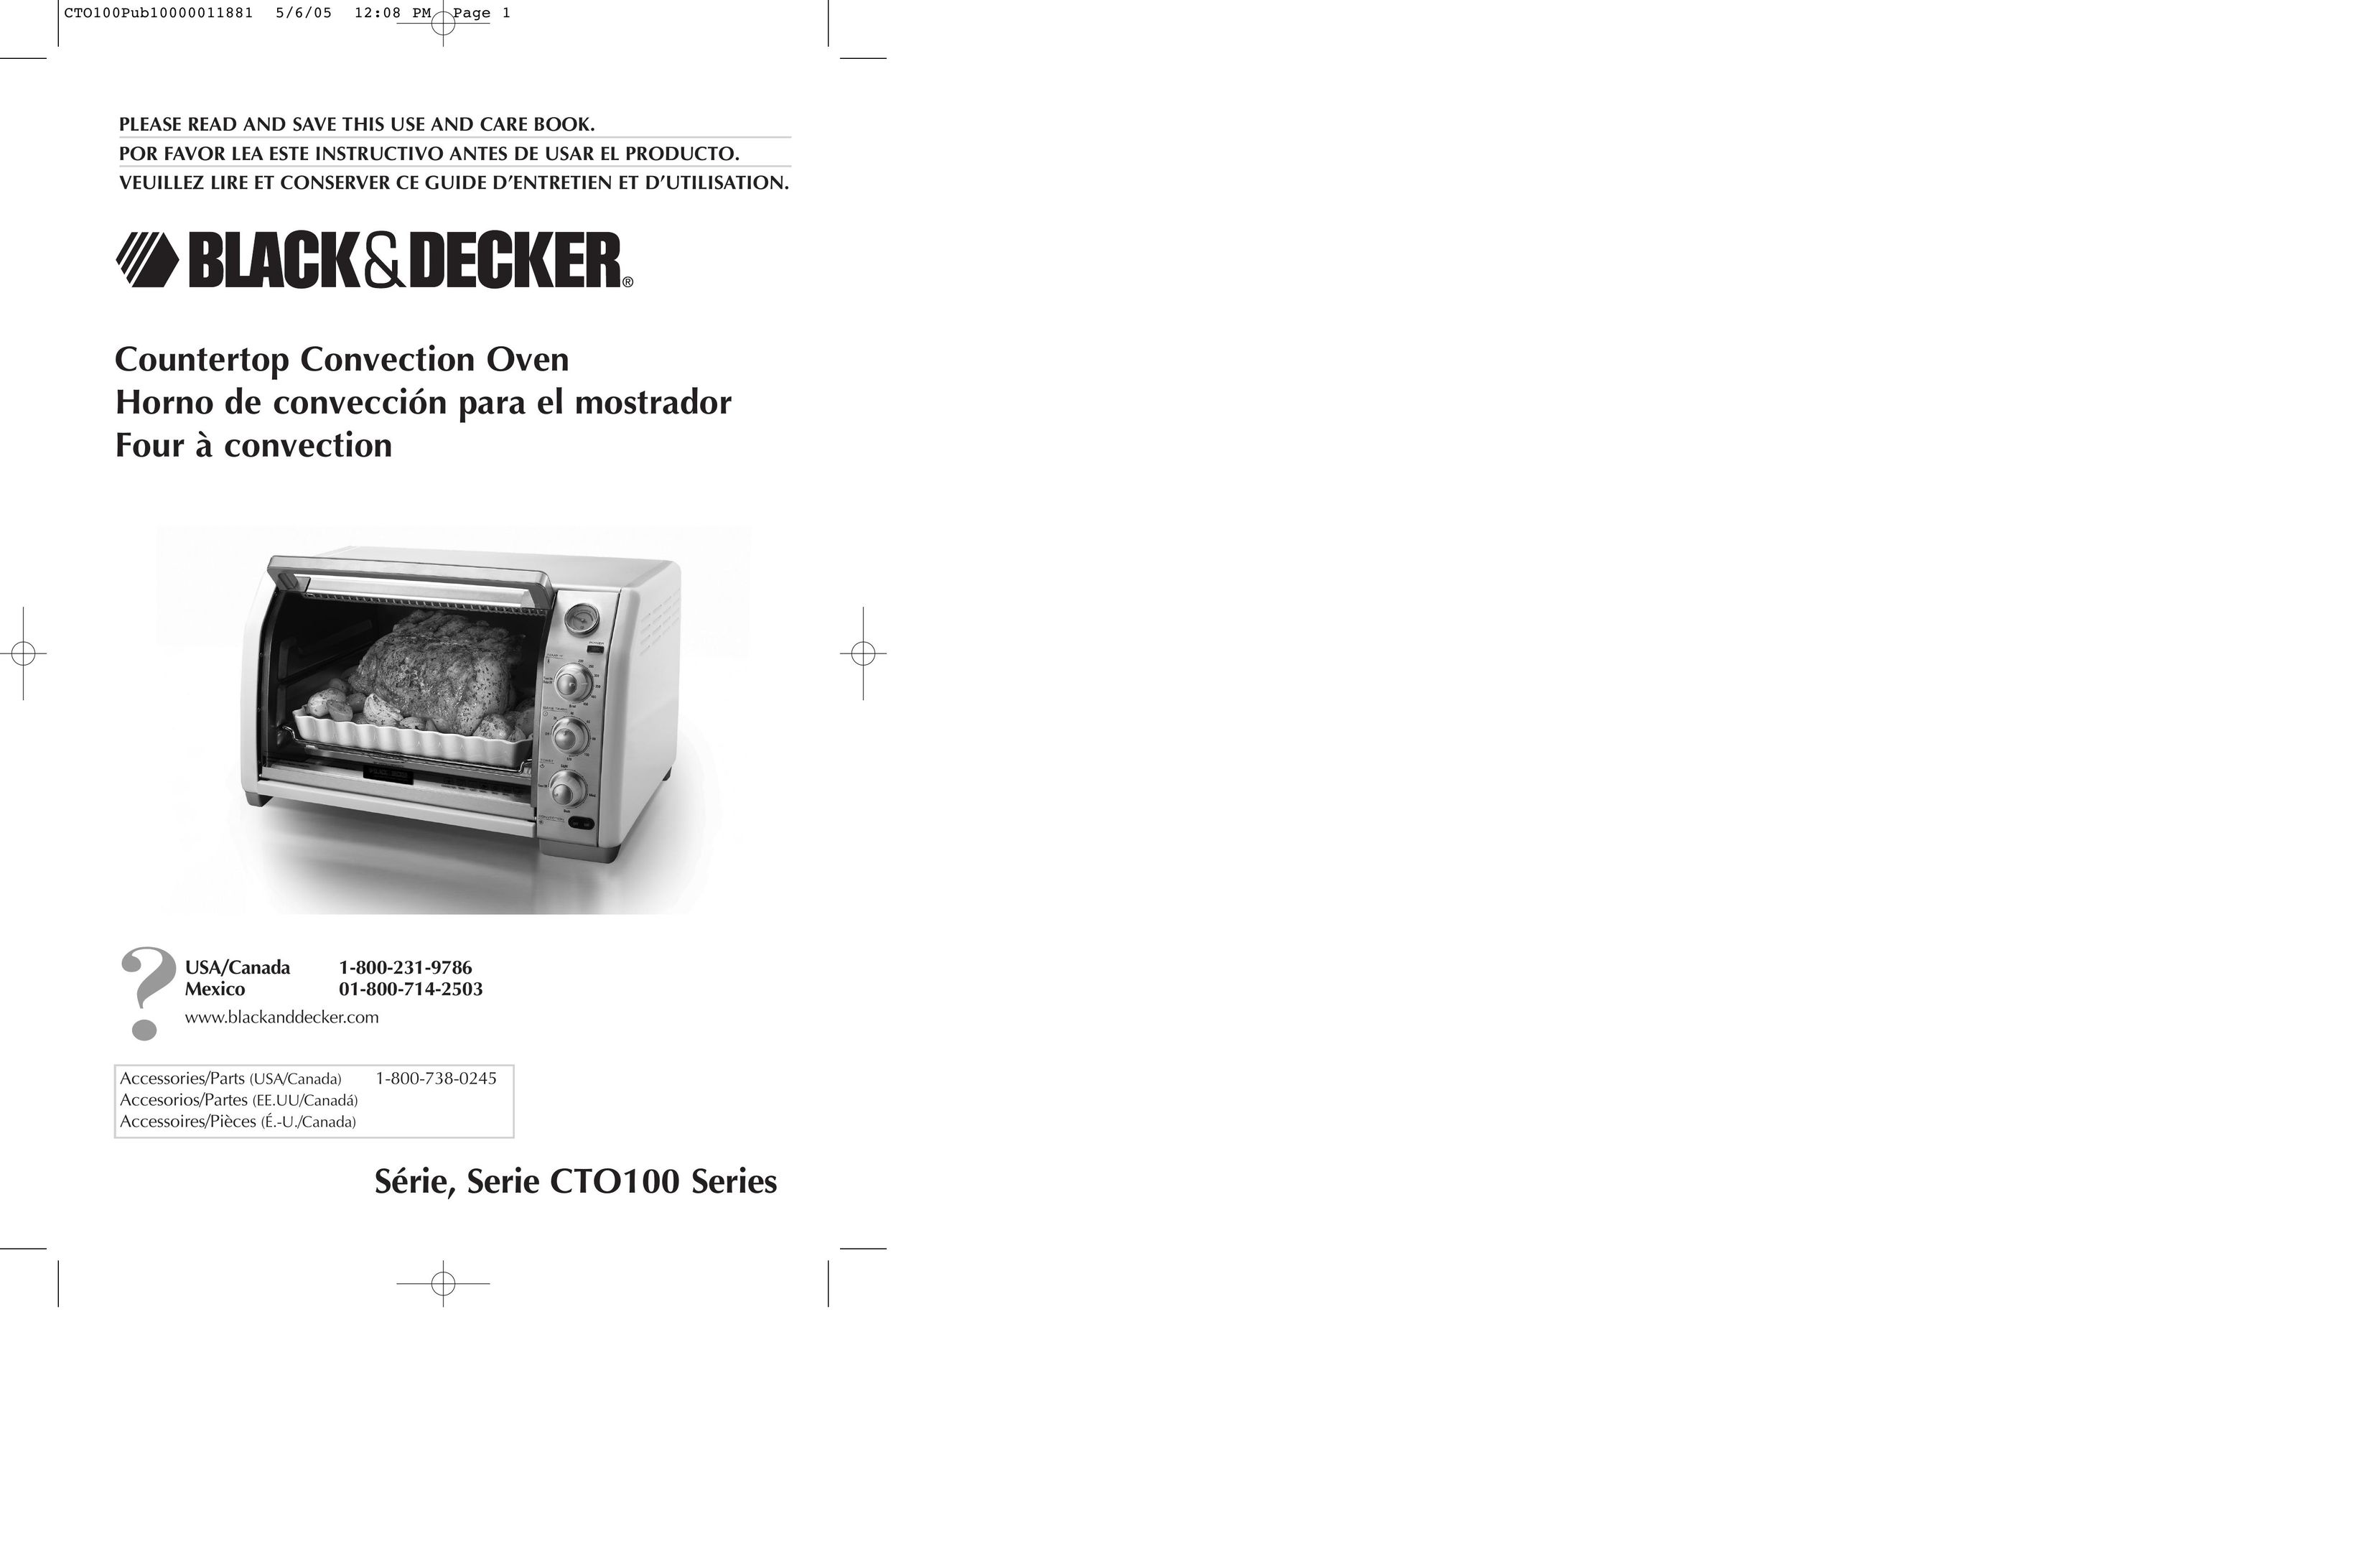 Black & Decker CTO100 Series Convection Oven User Manual